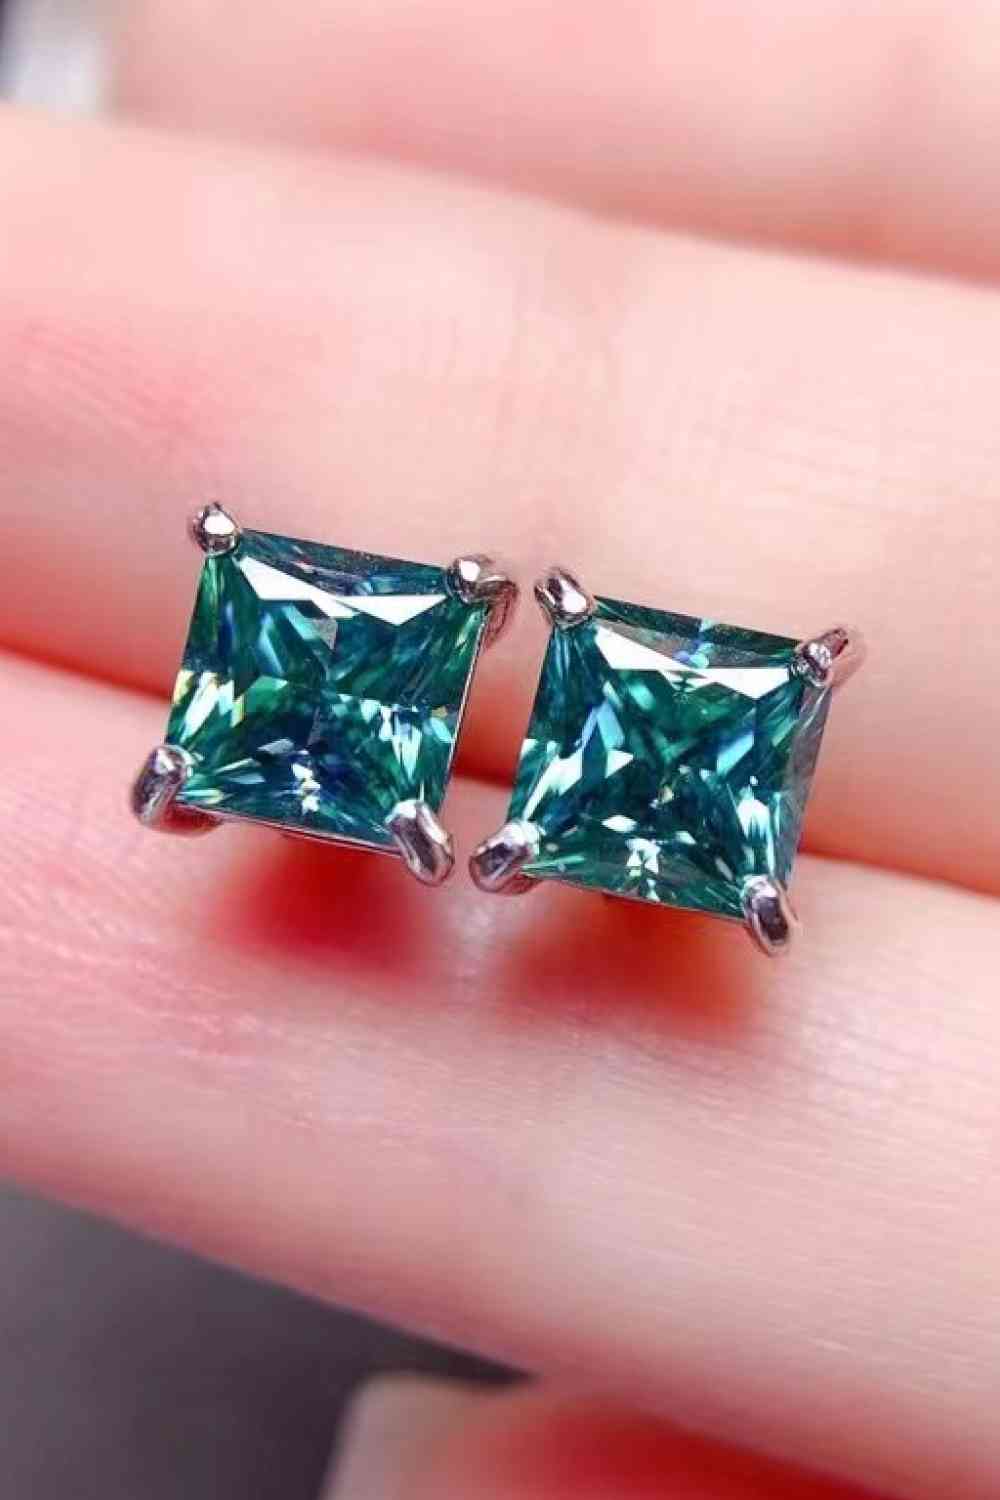 a pair of square cut green diamond earrings